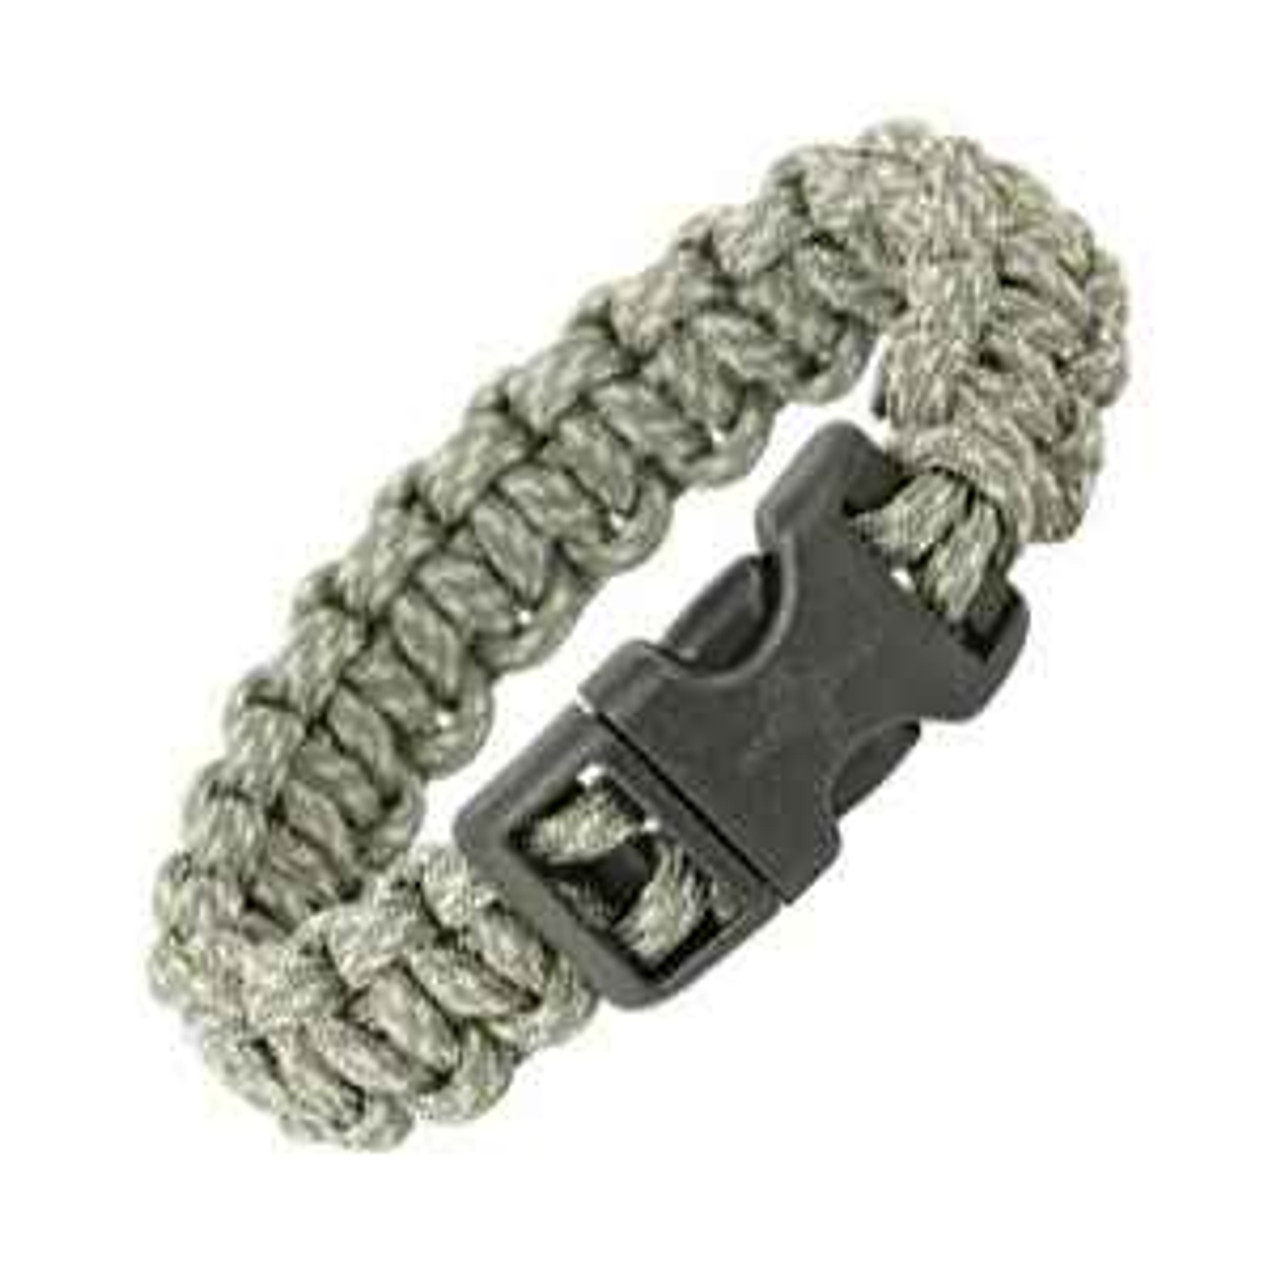 Para Cord Survival Bracelet Digital Camo. Size Small